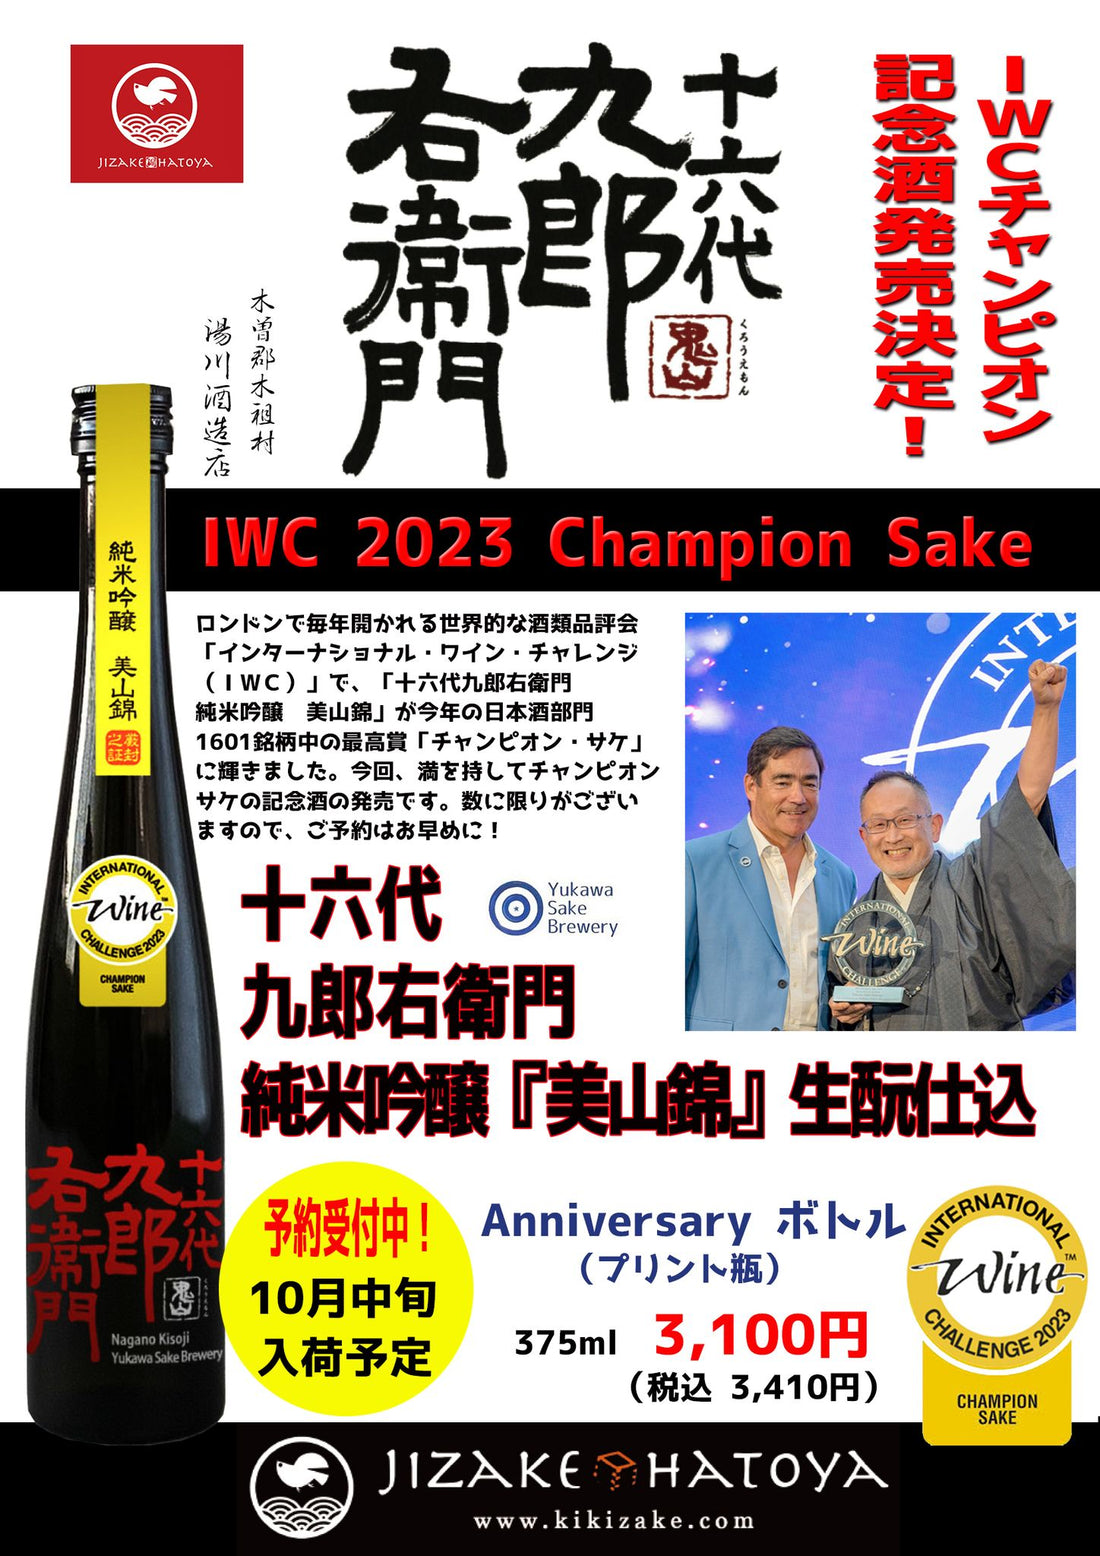 【木曽 湯川酒造】IWC2023 Chanpiom Sake Anniversary ボトル 十六代九郎右衛門　純米吟醸「美山錦」生酛仕込み